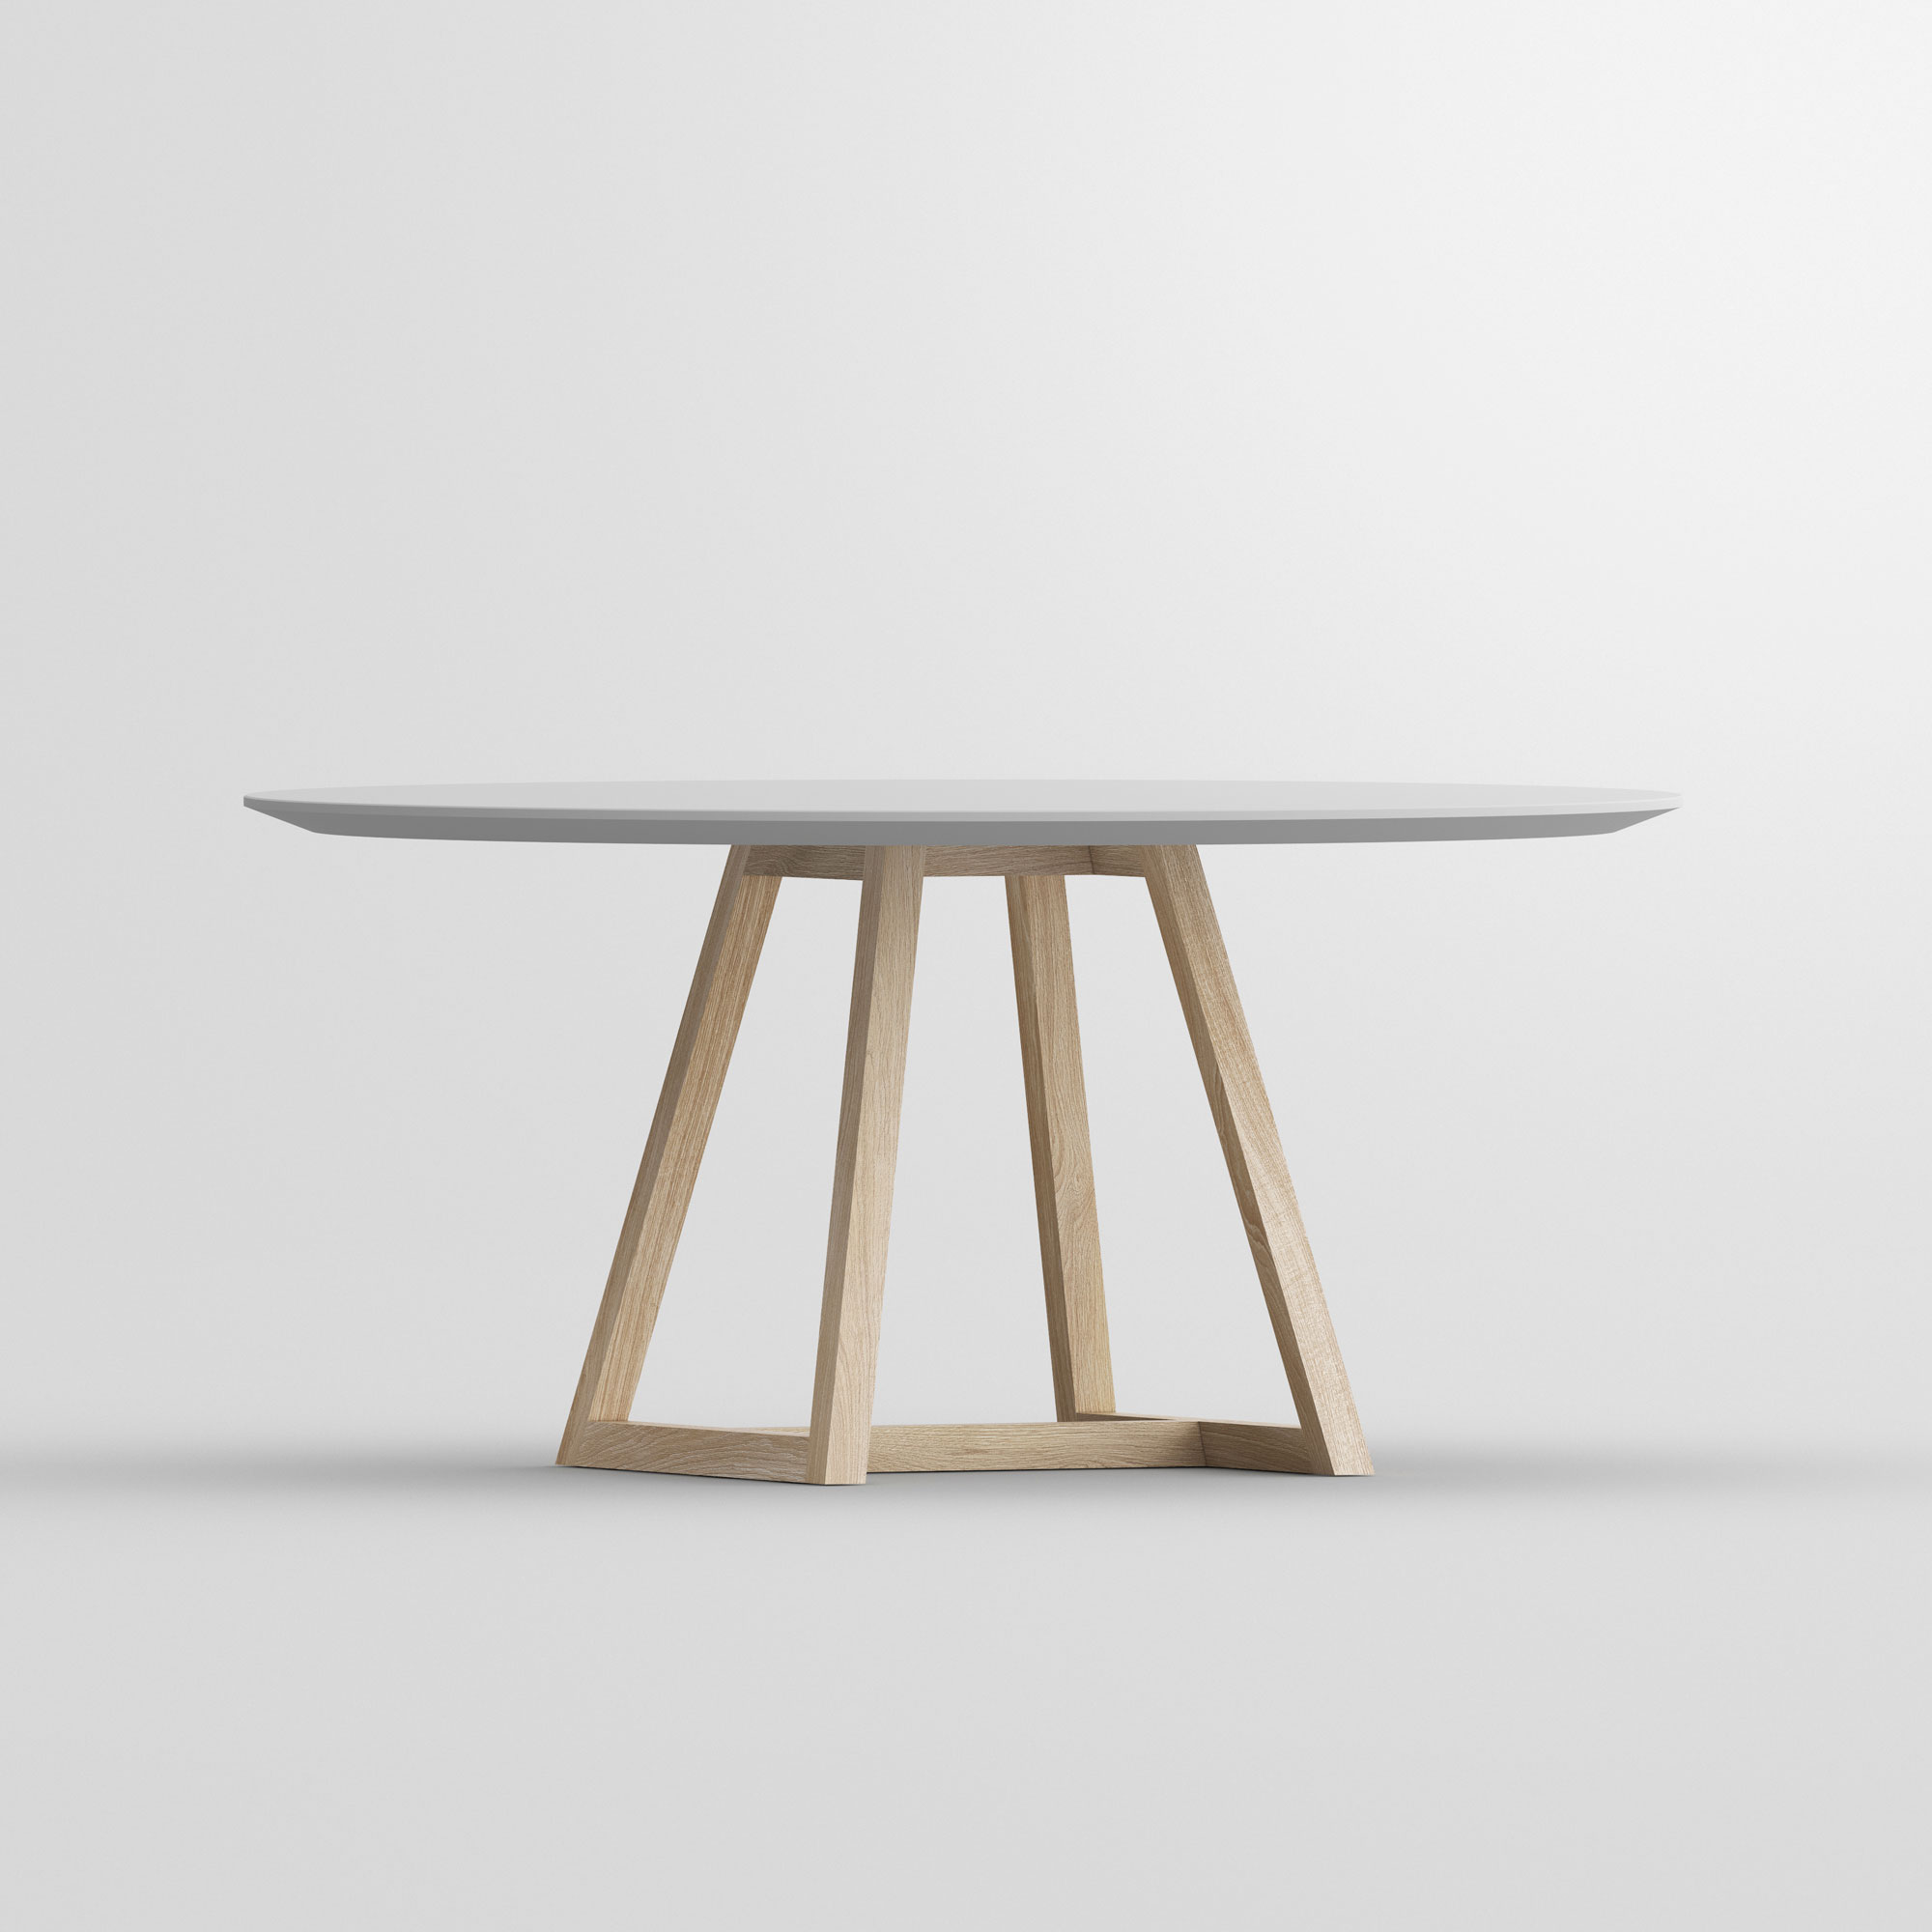 Round Linoleum Table MARGO ROUND LINO cam2 custom made in solid wood by vitamin design